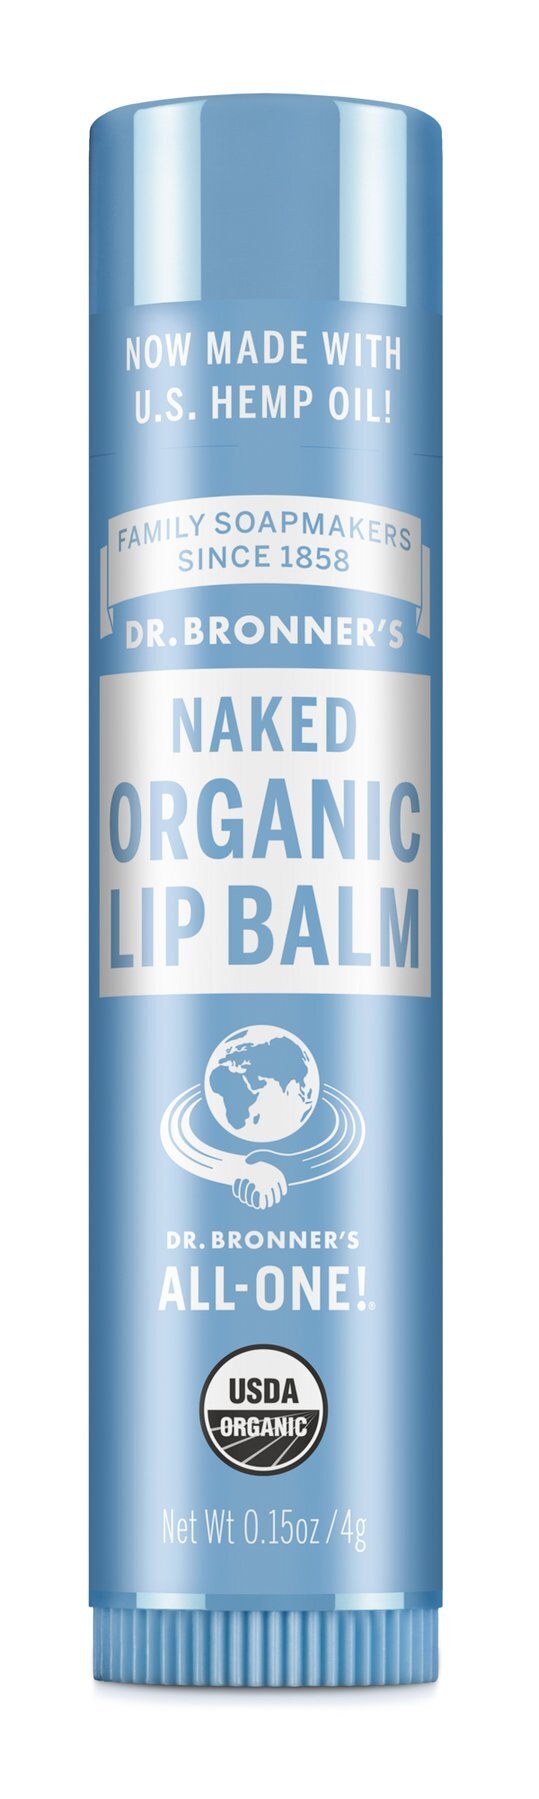 Dr. Bronner's Lip Balm